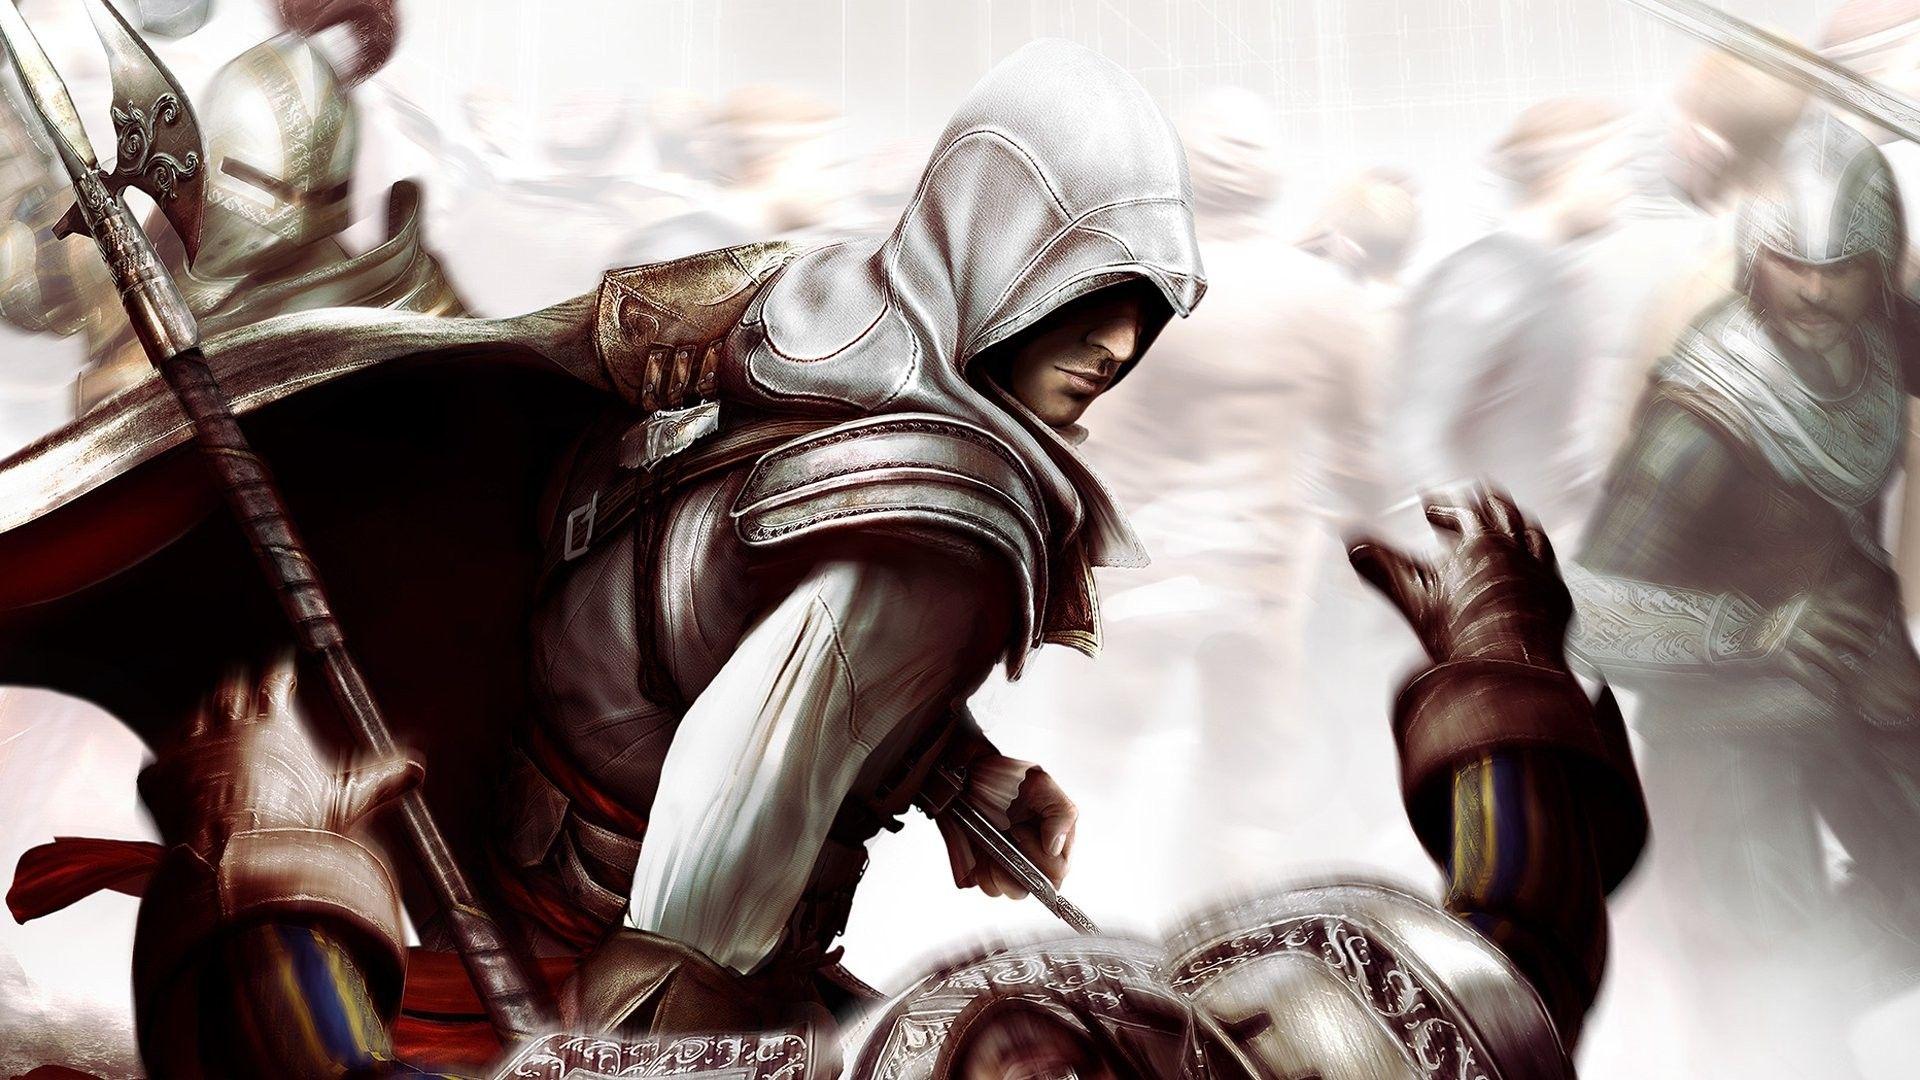 Wallpaper, 1920x1080 px, Assassins Creed Ezio Auditore